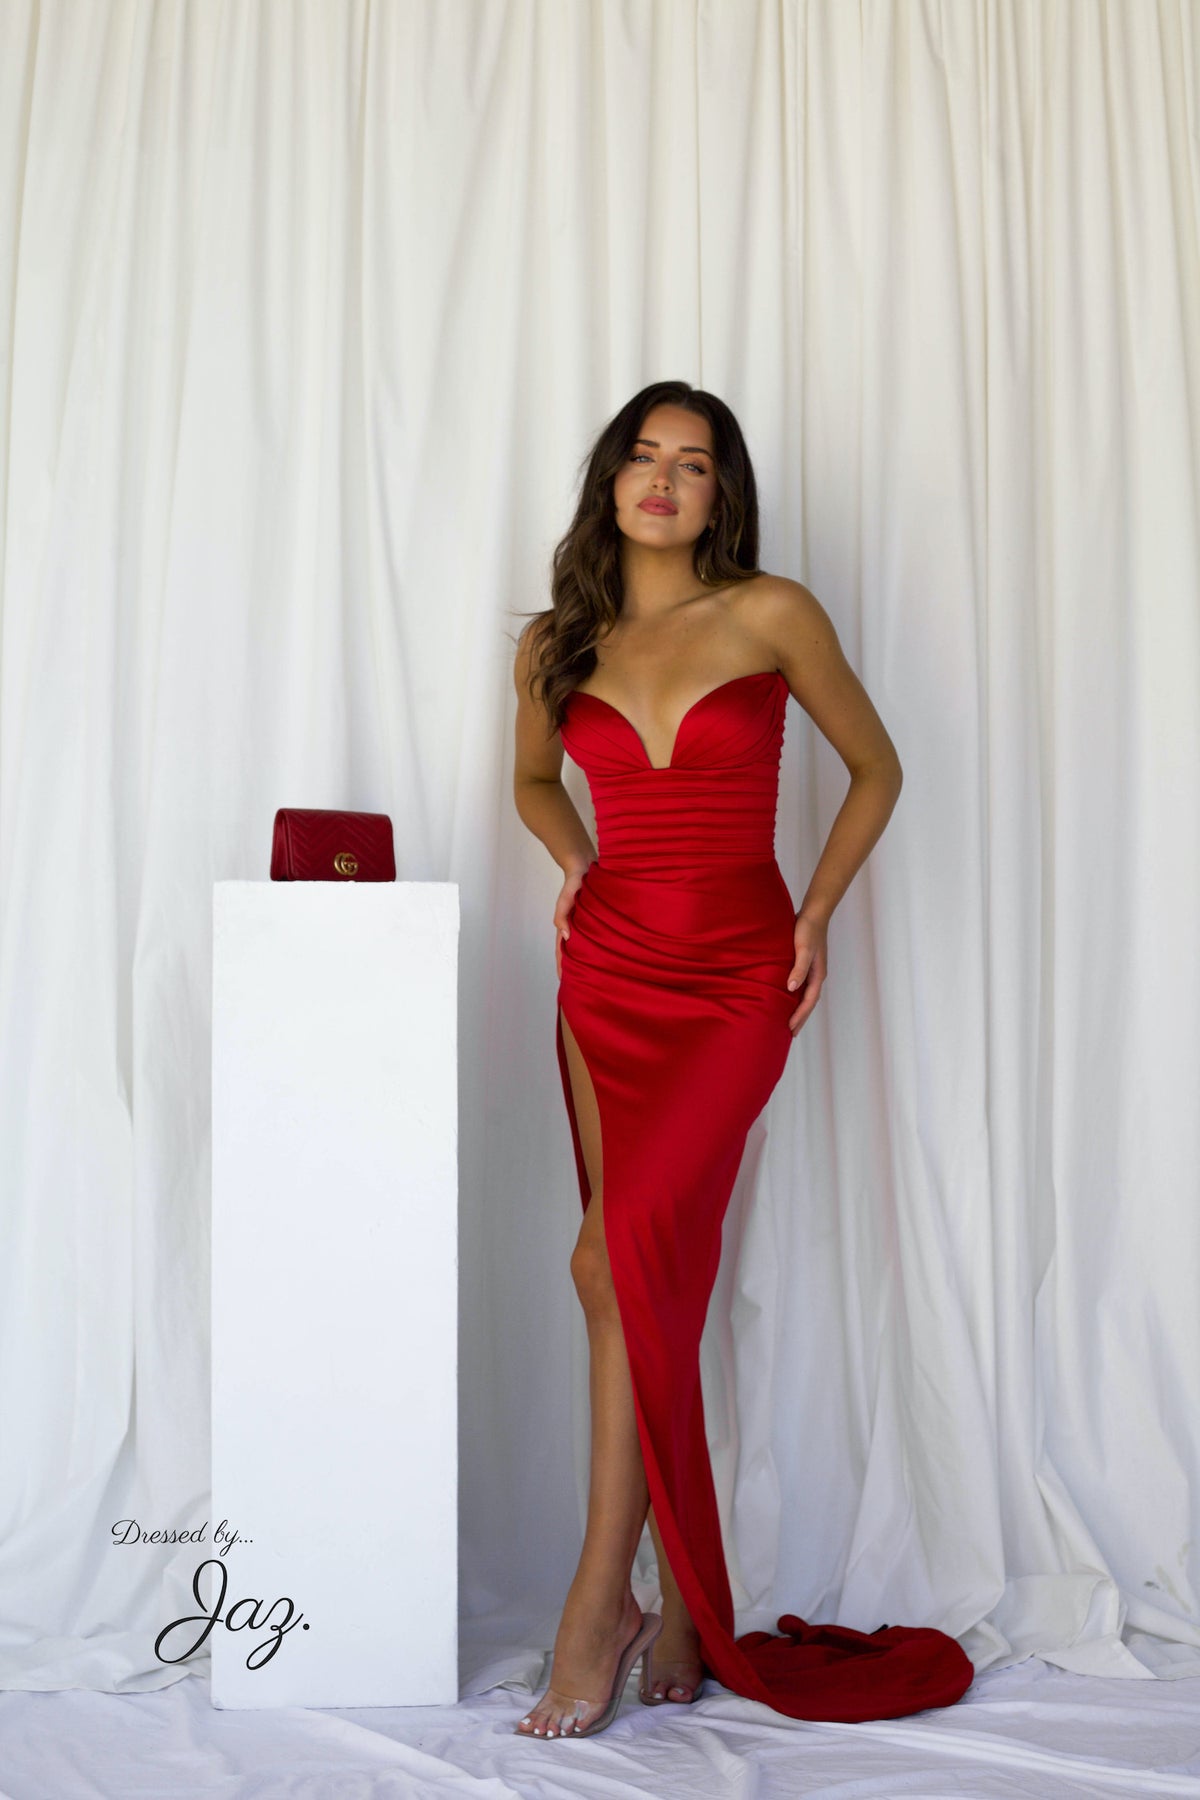 Lia Stublla red formal dress